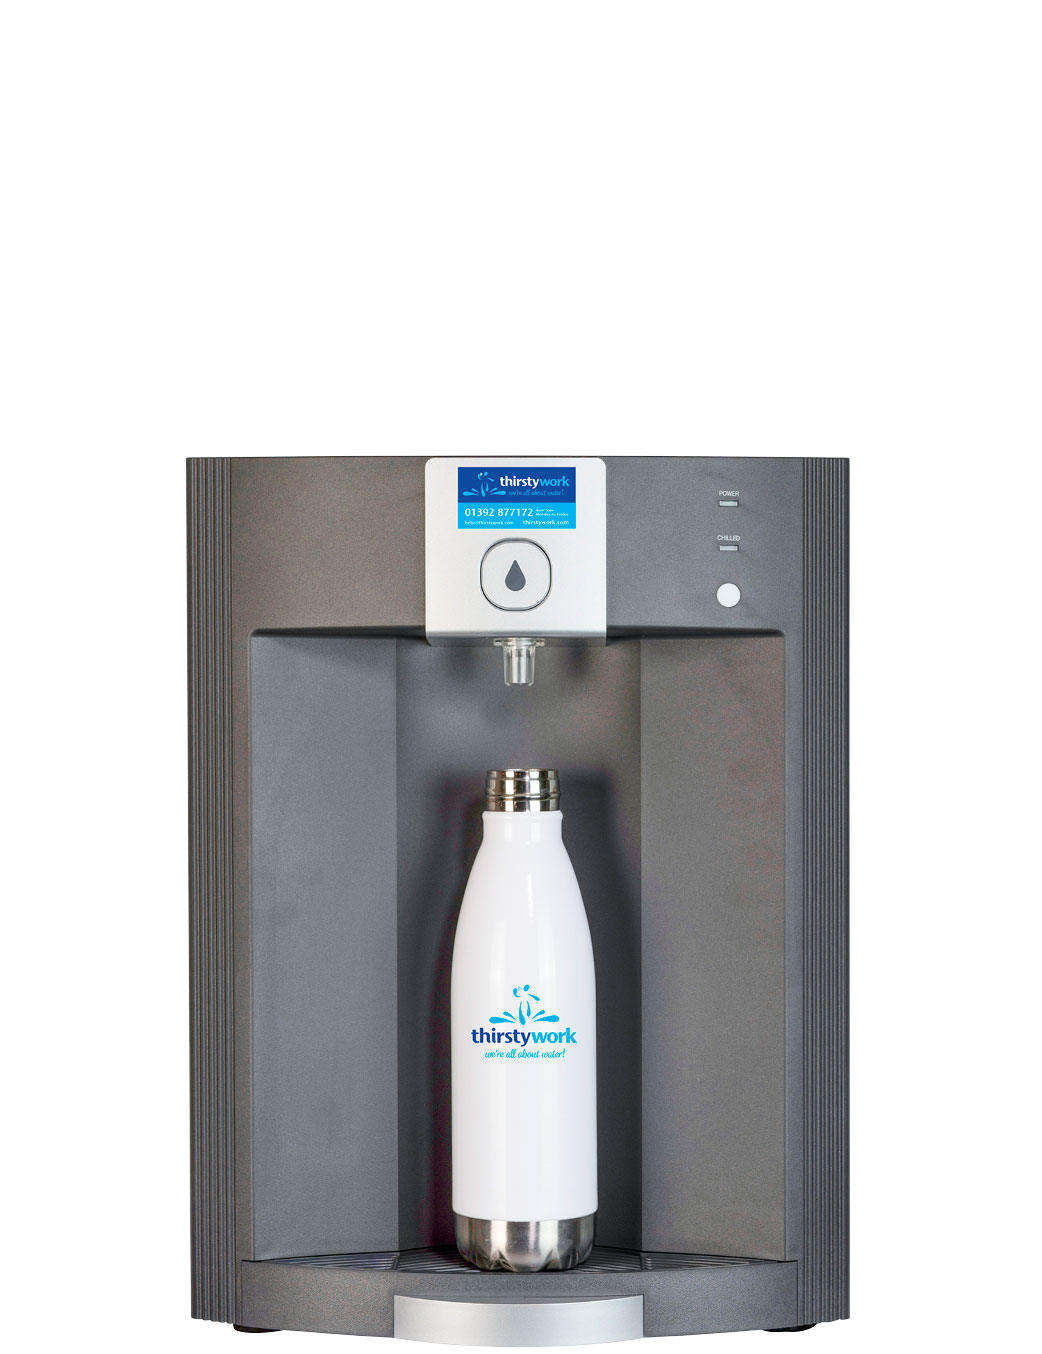 Counter top mains fed water dispenser for filling bottles